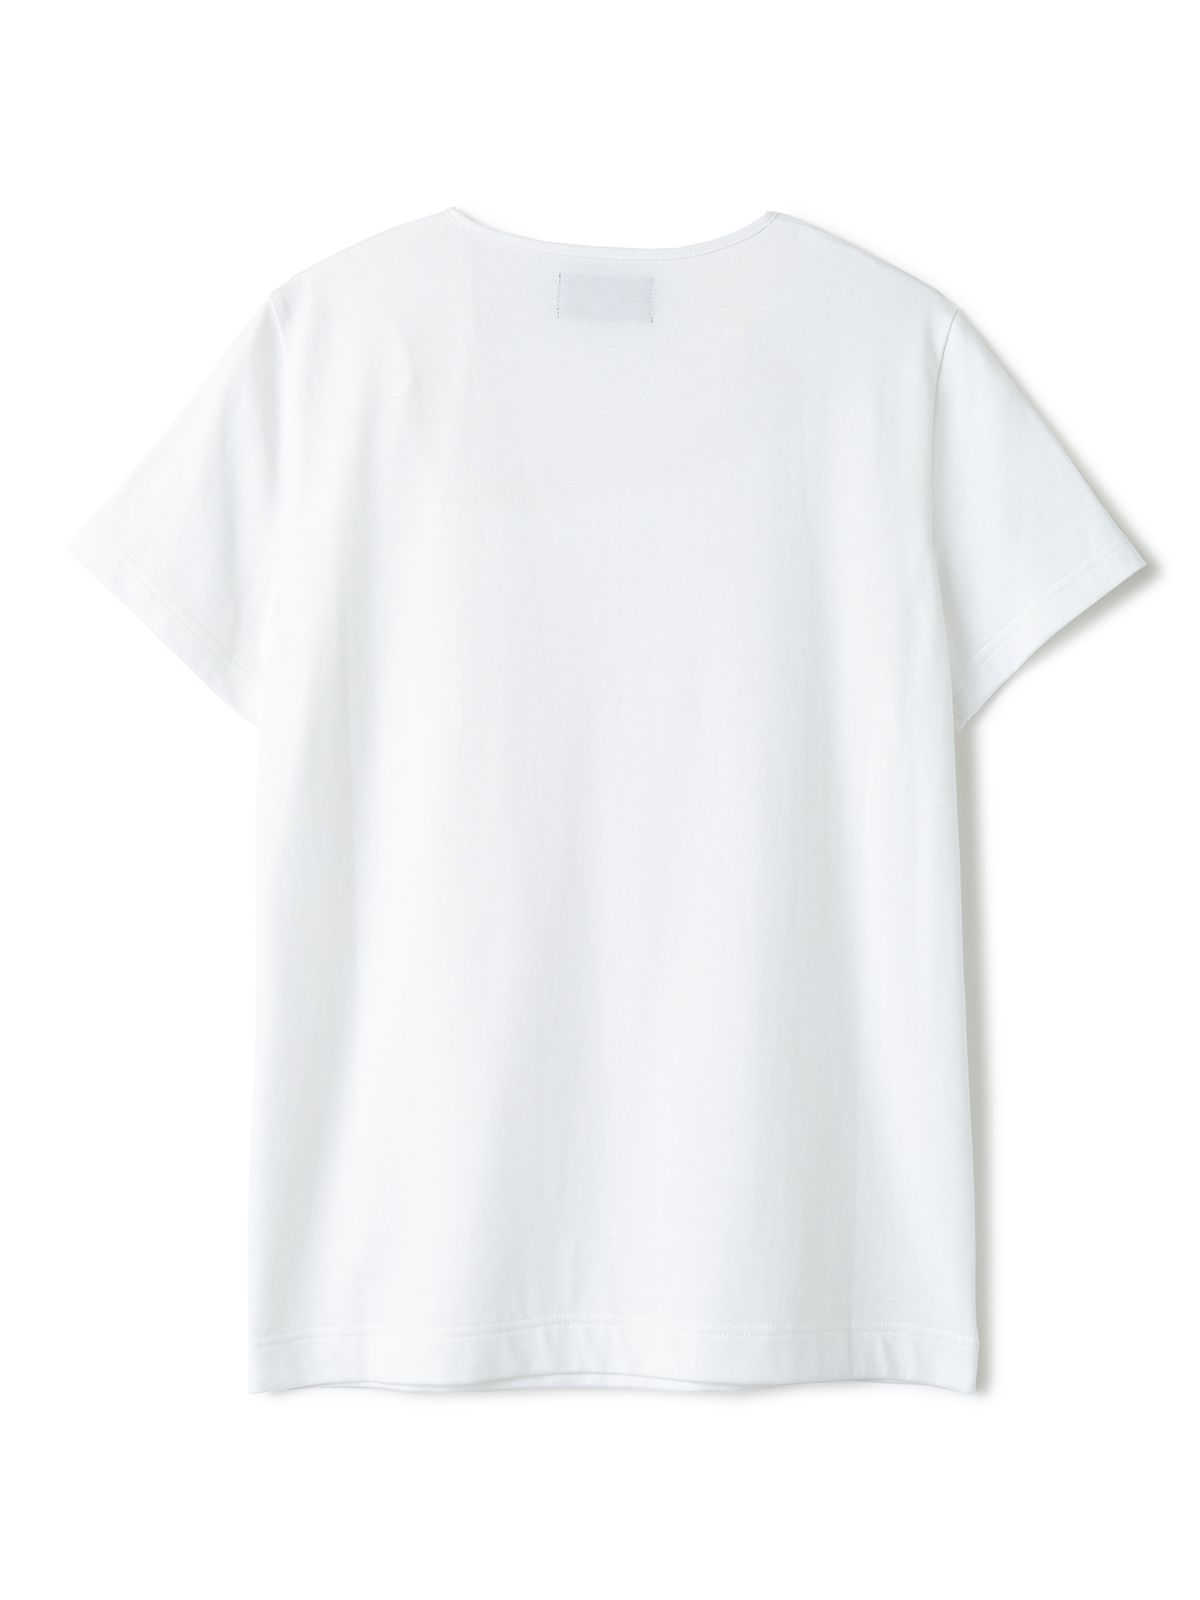 ribbon t-shirt / white